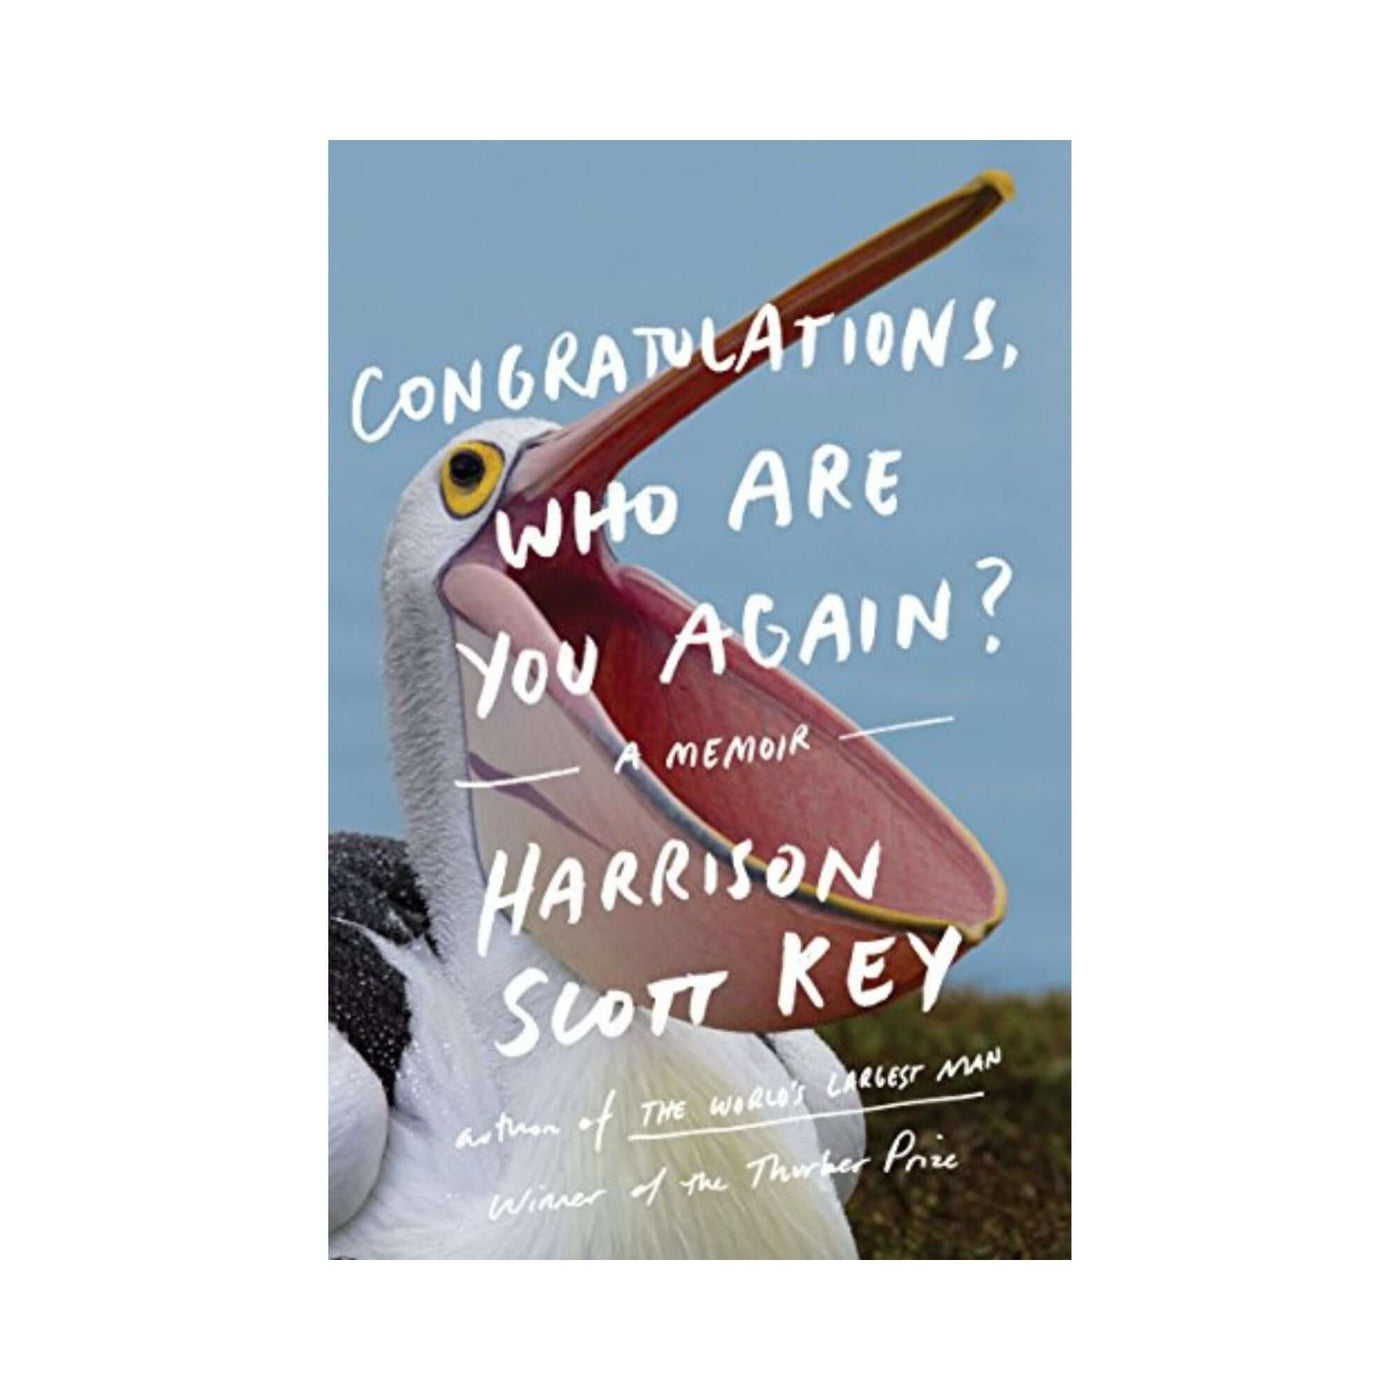 Congratulations, Who Are You Again?: A Memoir by Harrison Scott Key